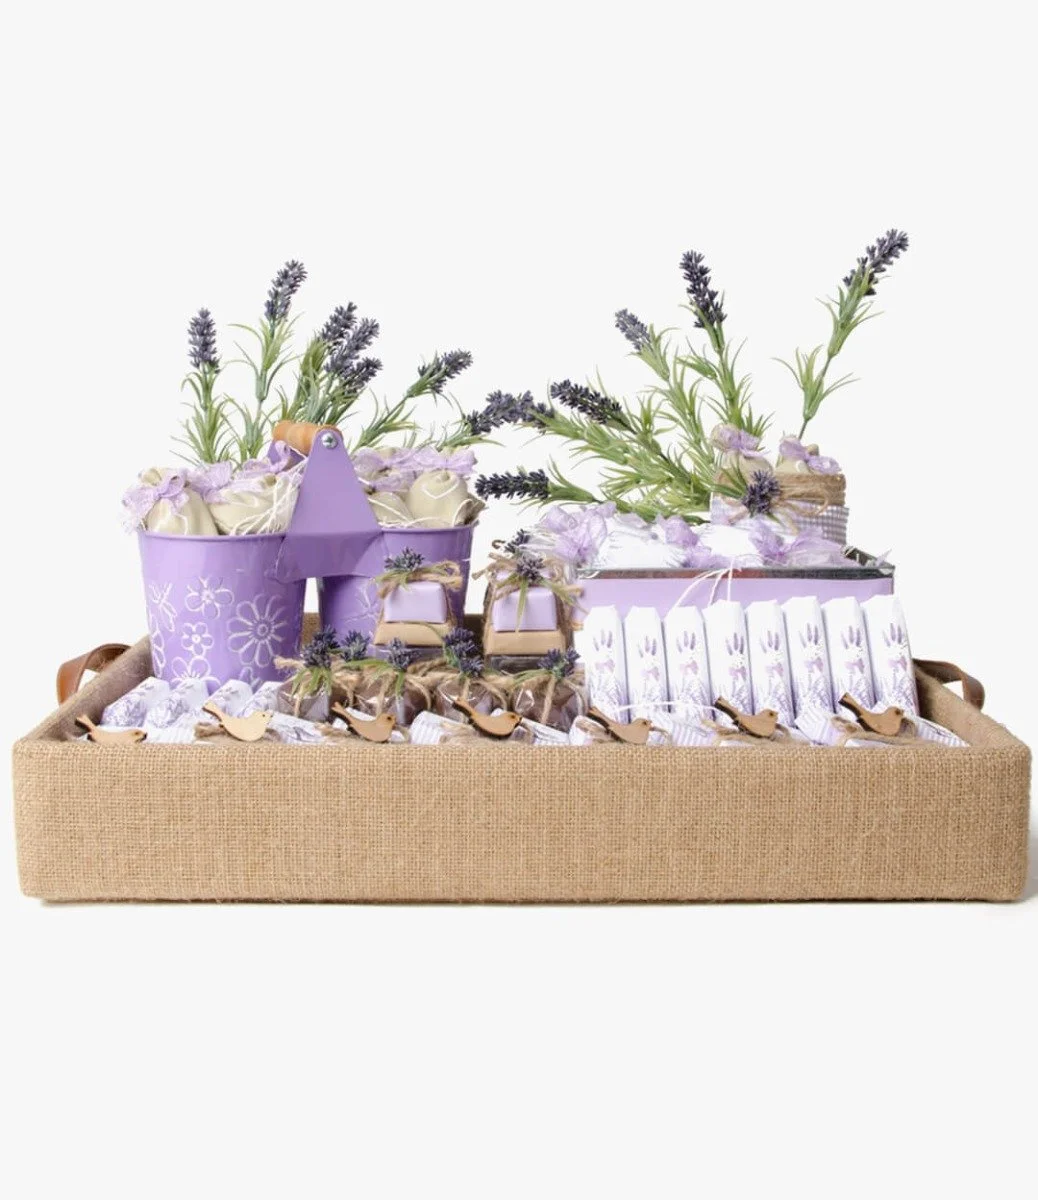 Lavender Love Confections Gift Set - Large